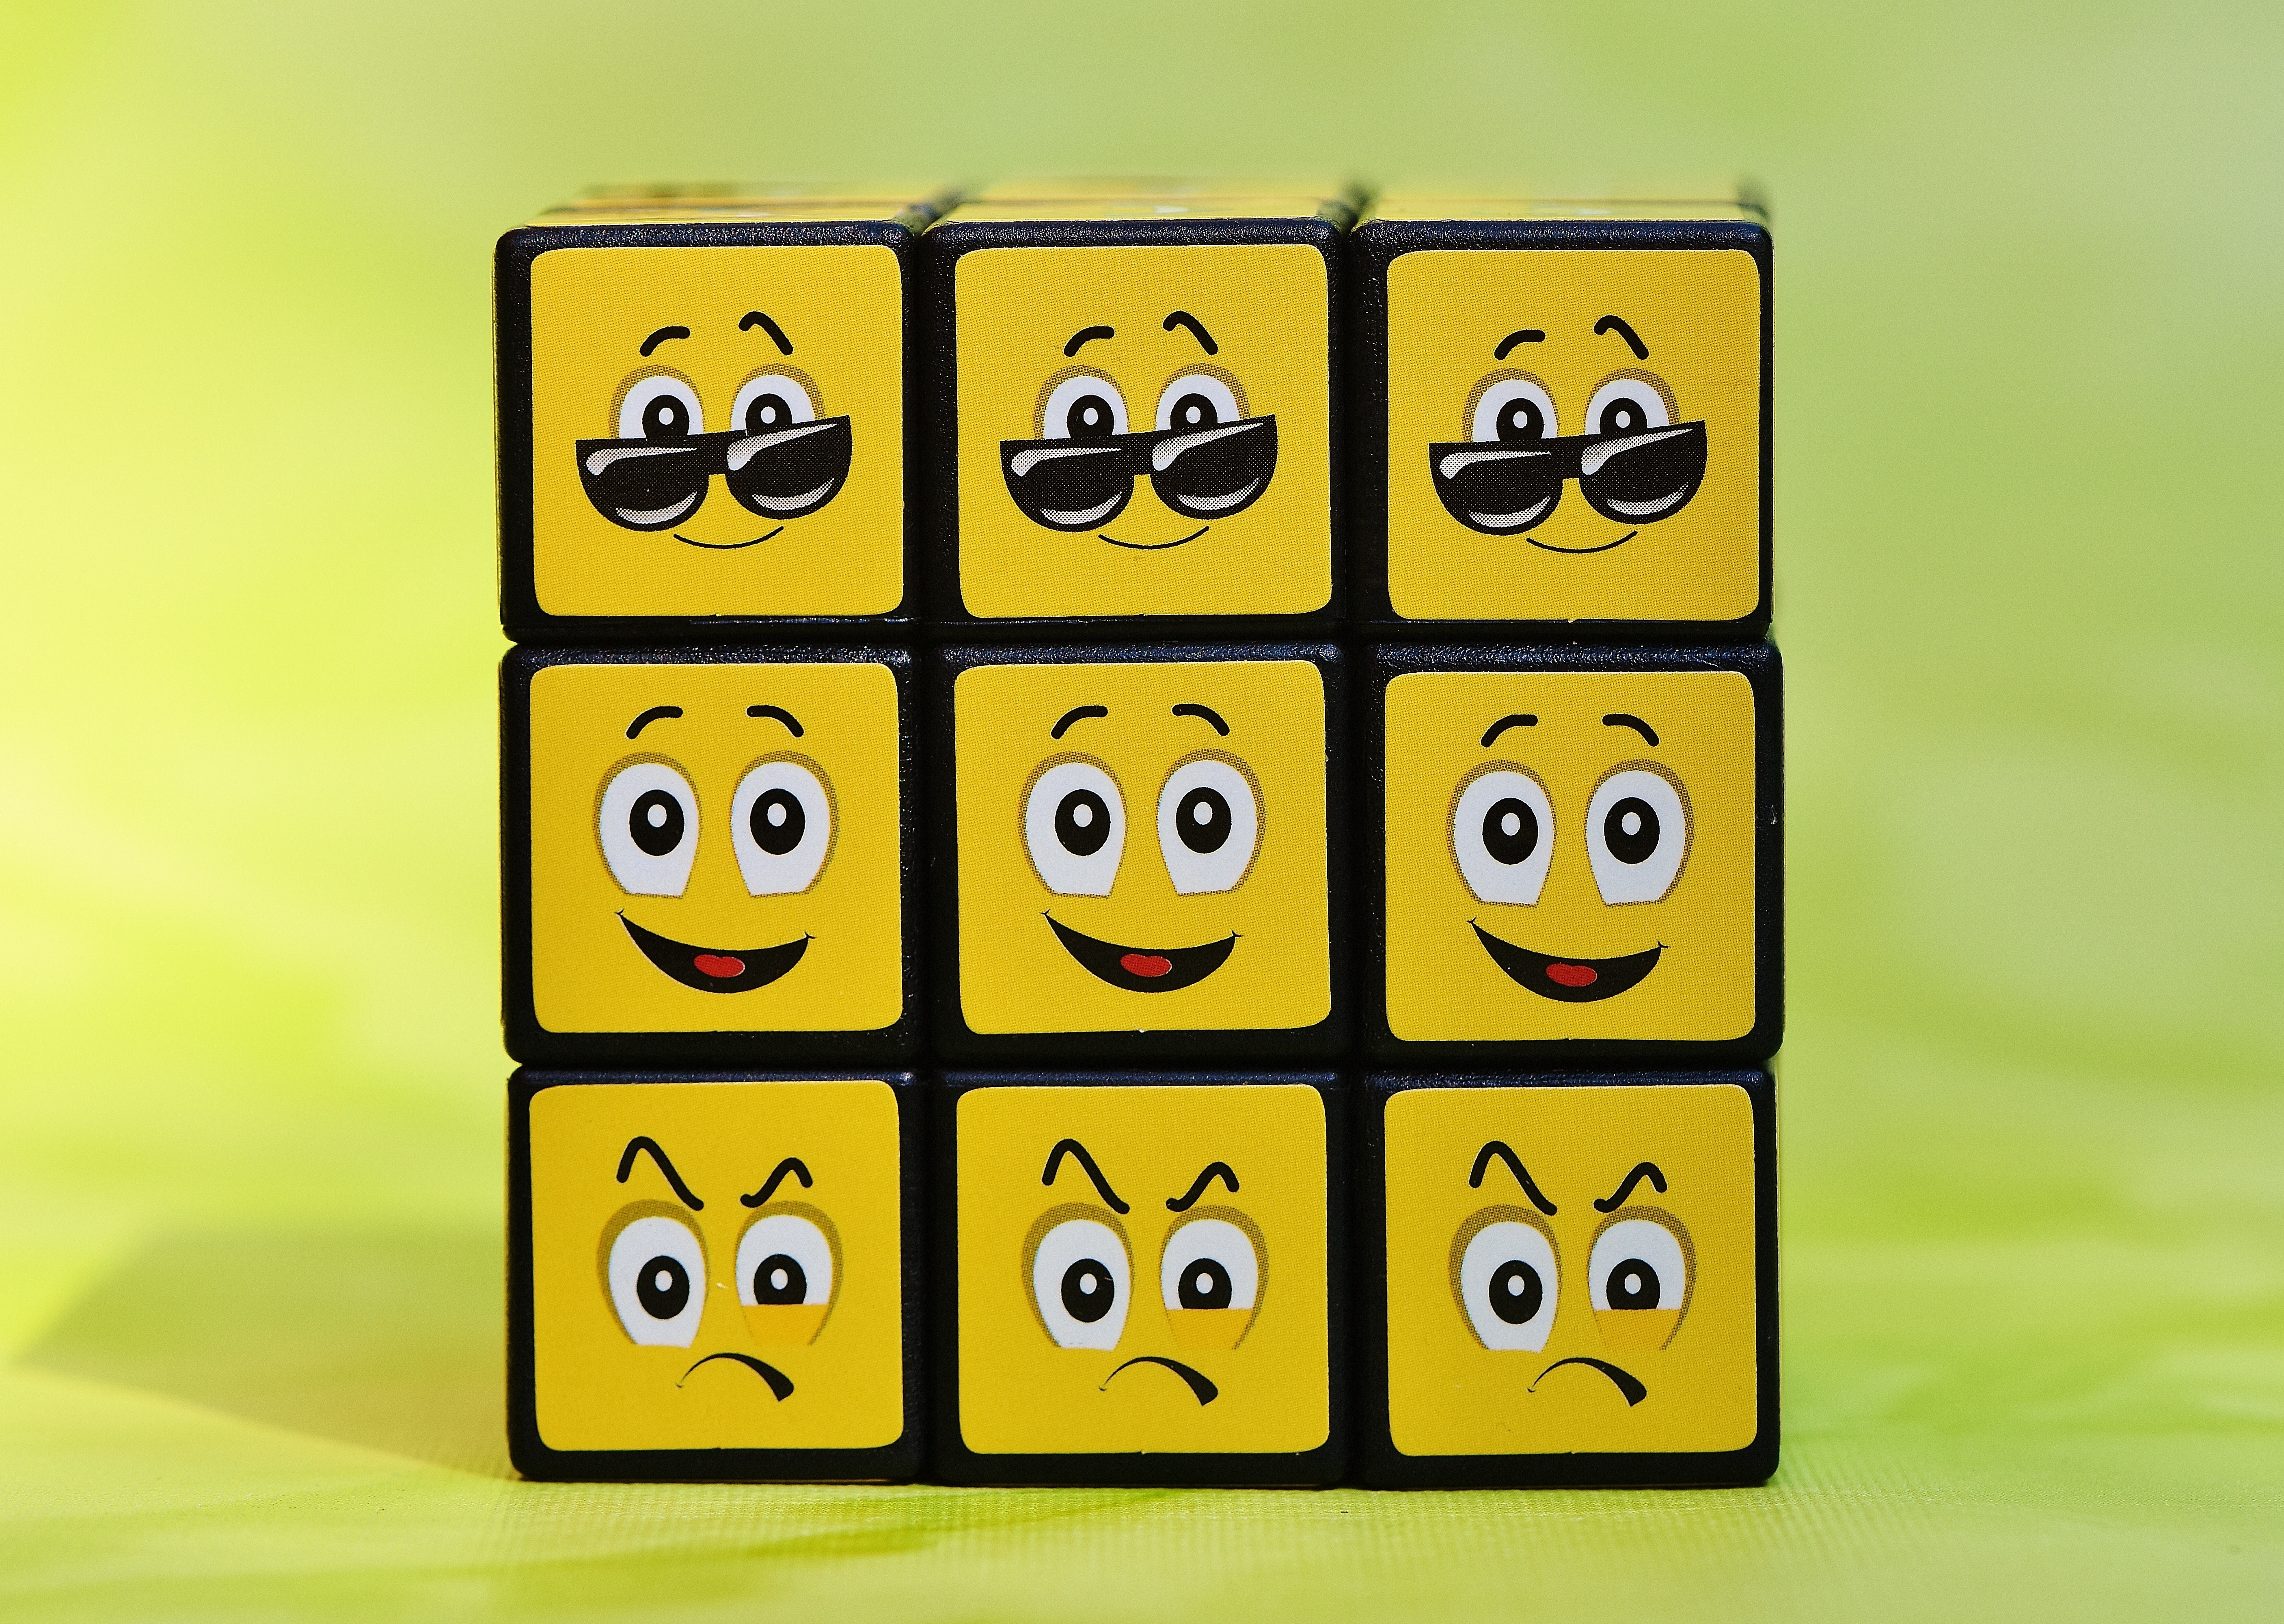 emoji 3 by 3 rubik's cube